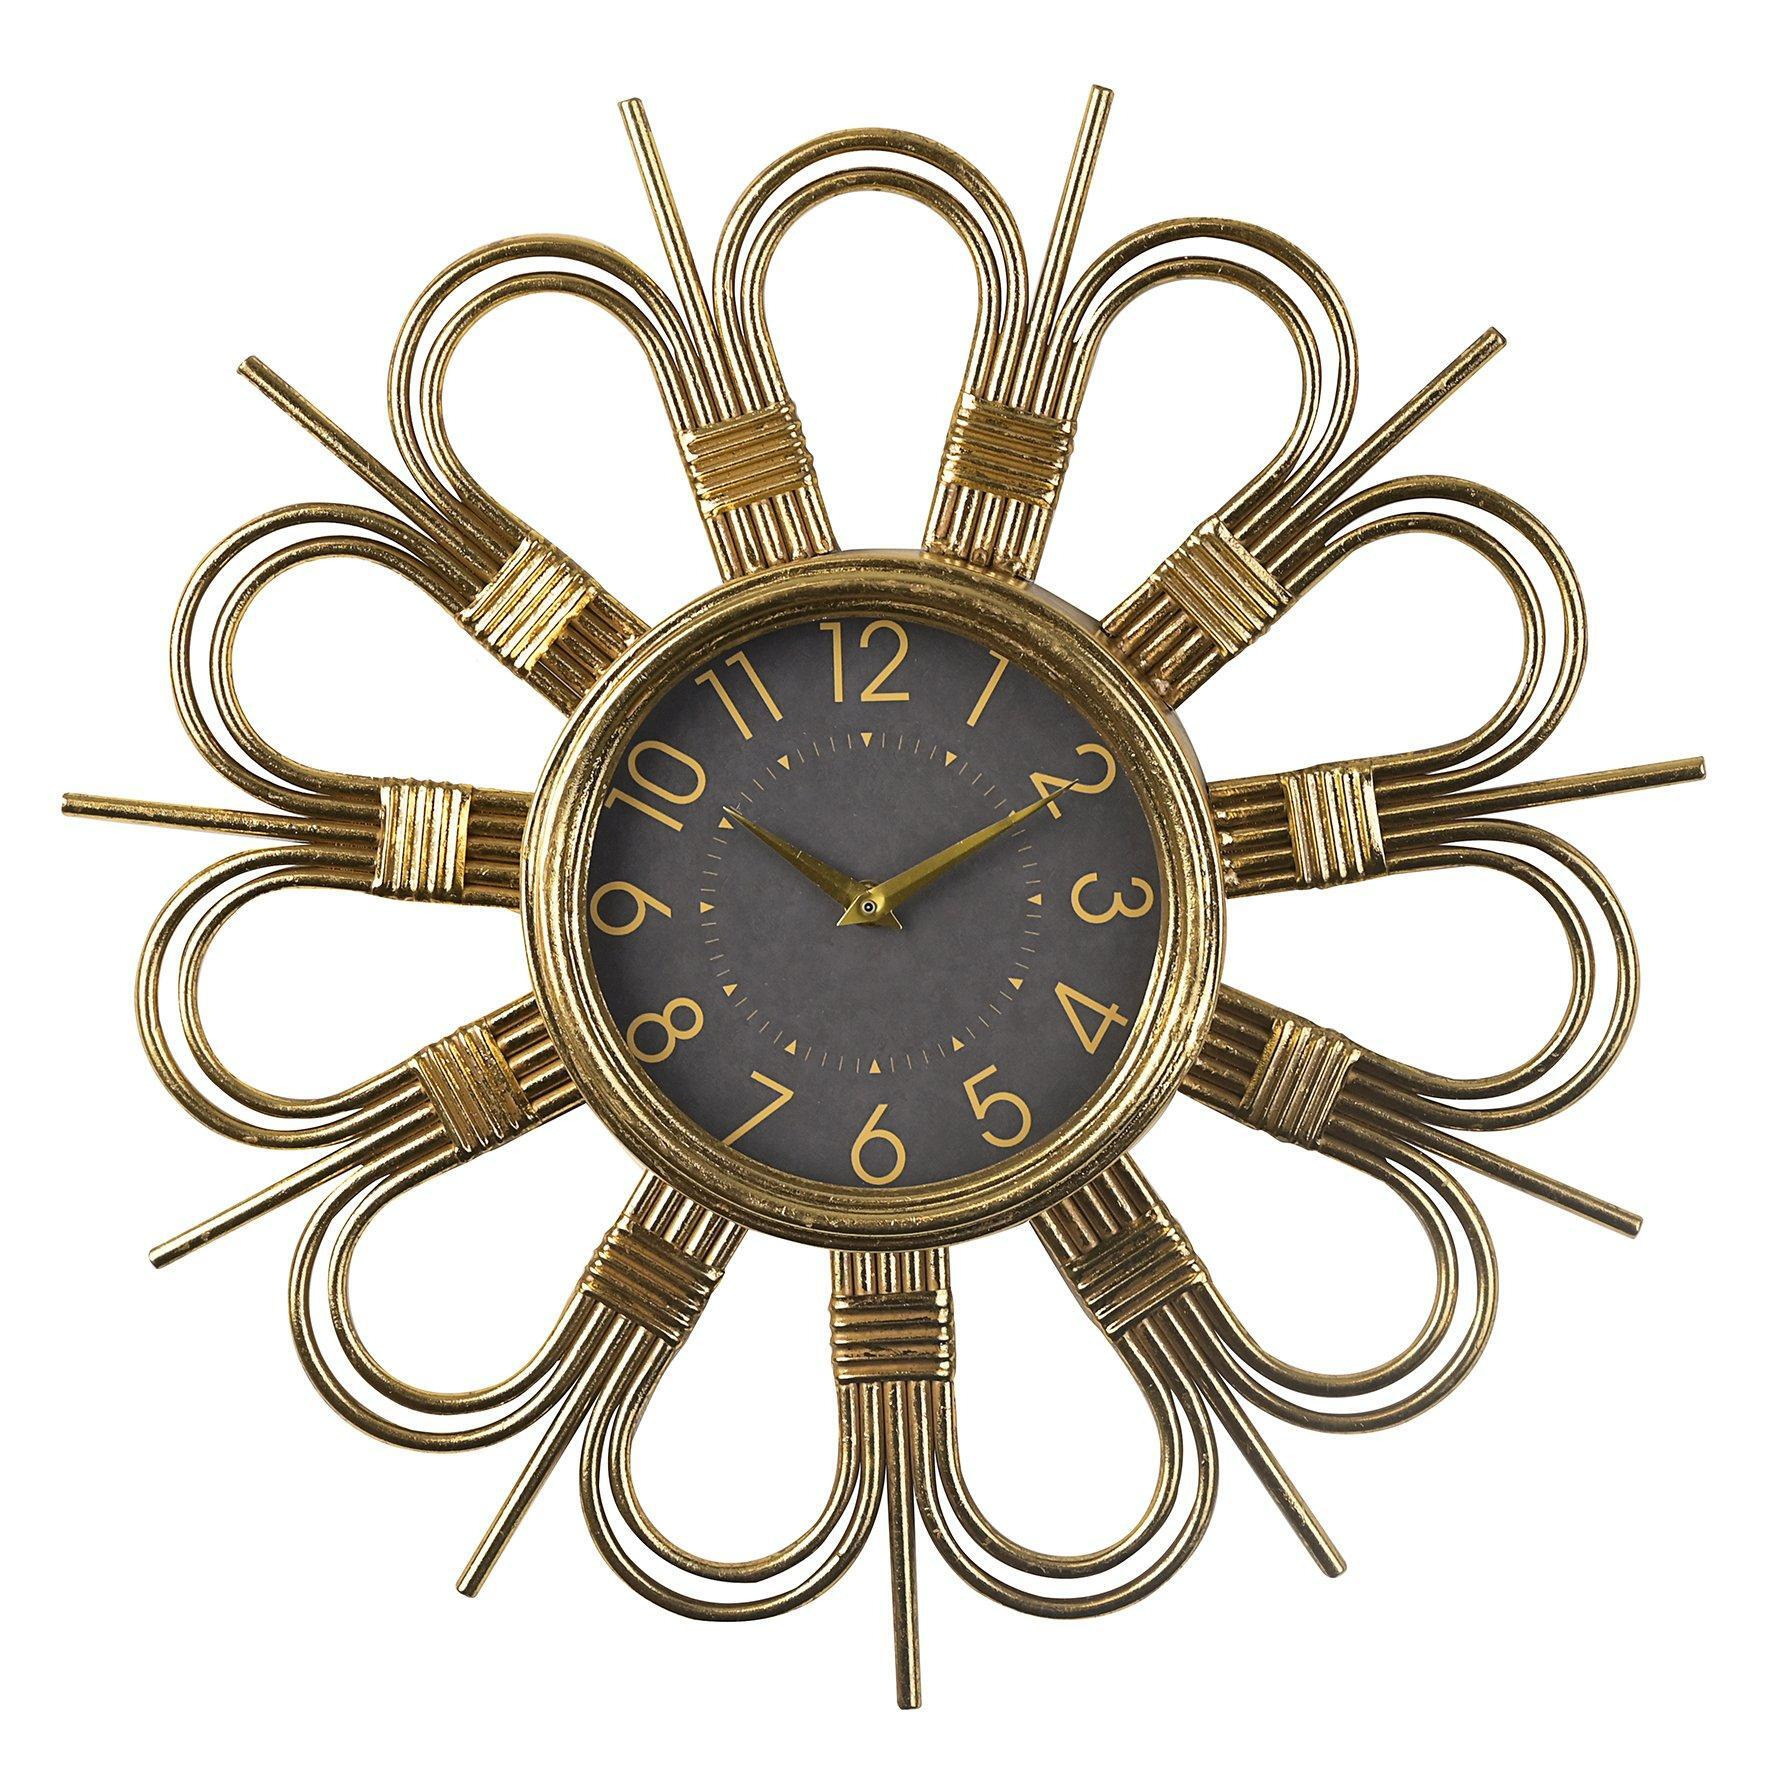 Hometime Wall Clock Floral Shaped Design - image 1